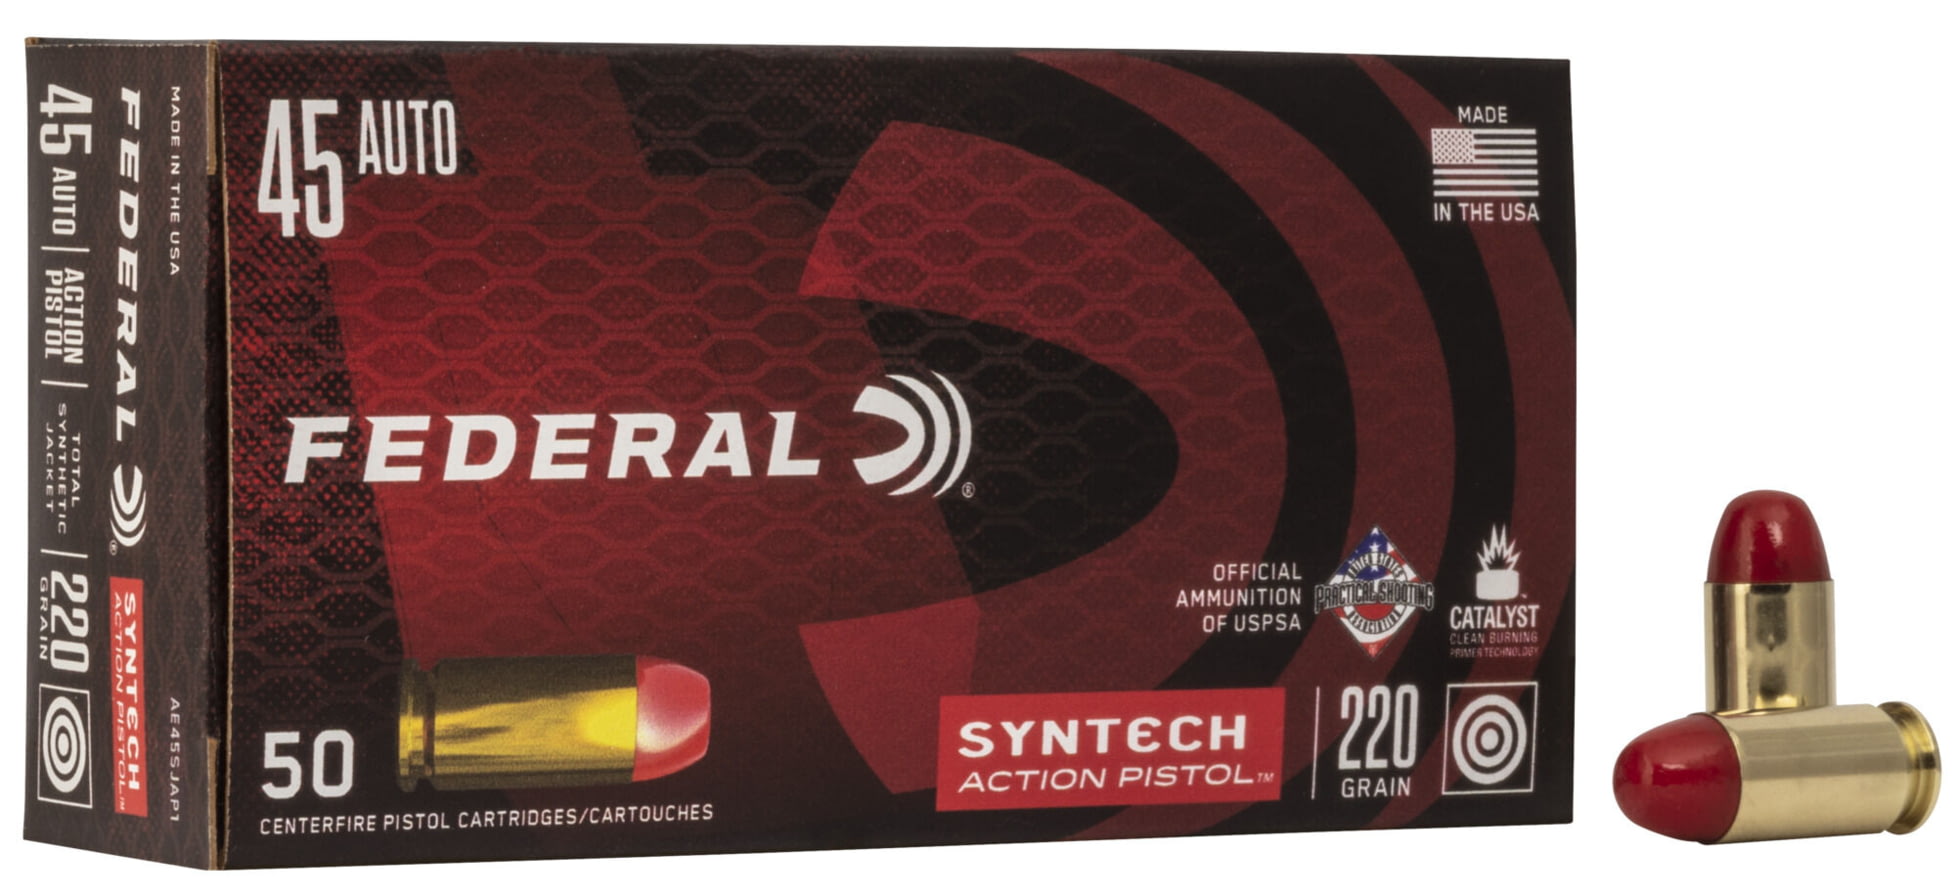 Federal Premium Centerfire Handgun Ammunition .45 ACP 220 grain Syntech Total Synthetic Jacket Centerfire Pistol Ammunition